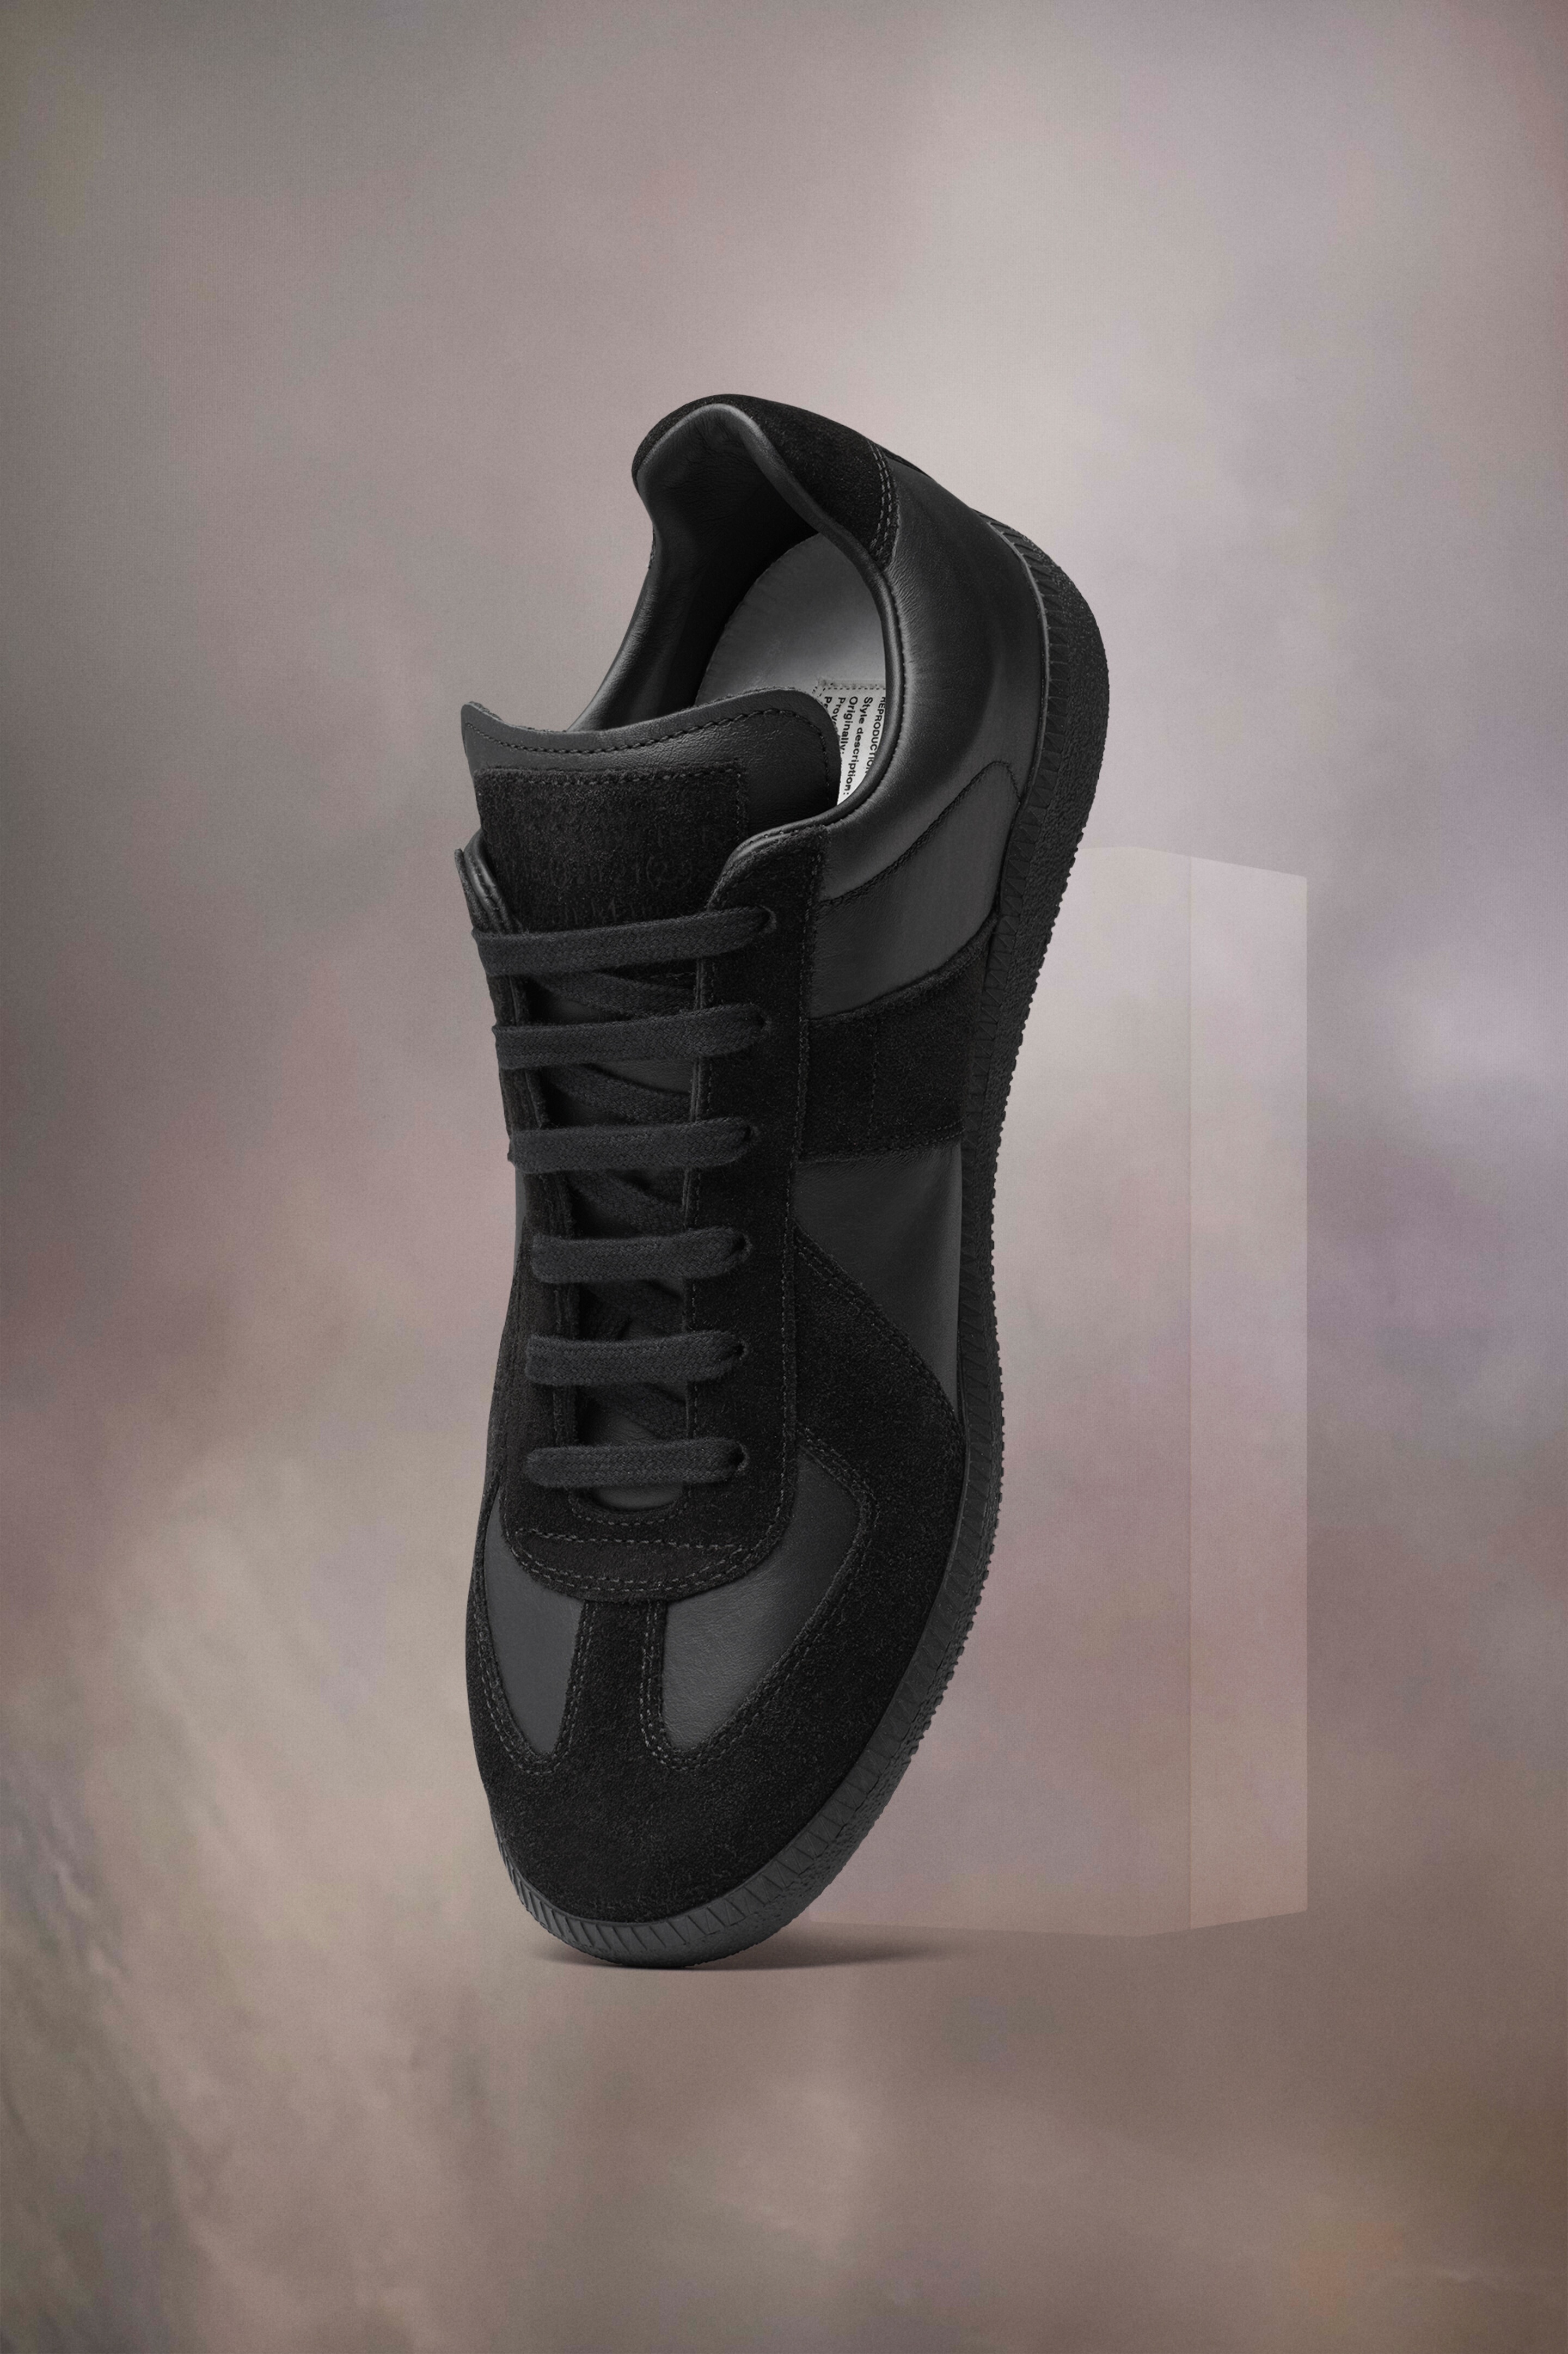 Replica sneaker - 1